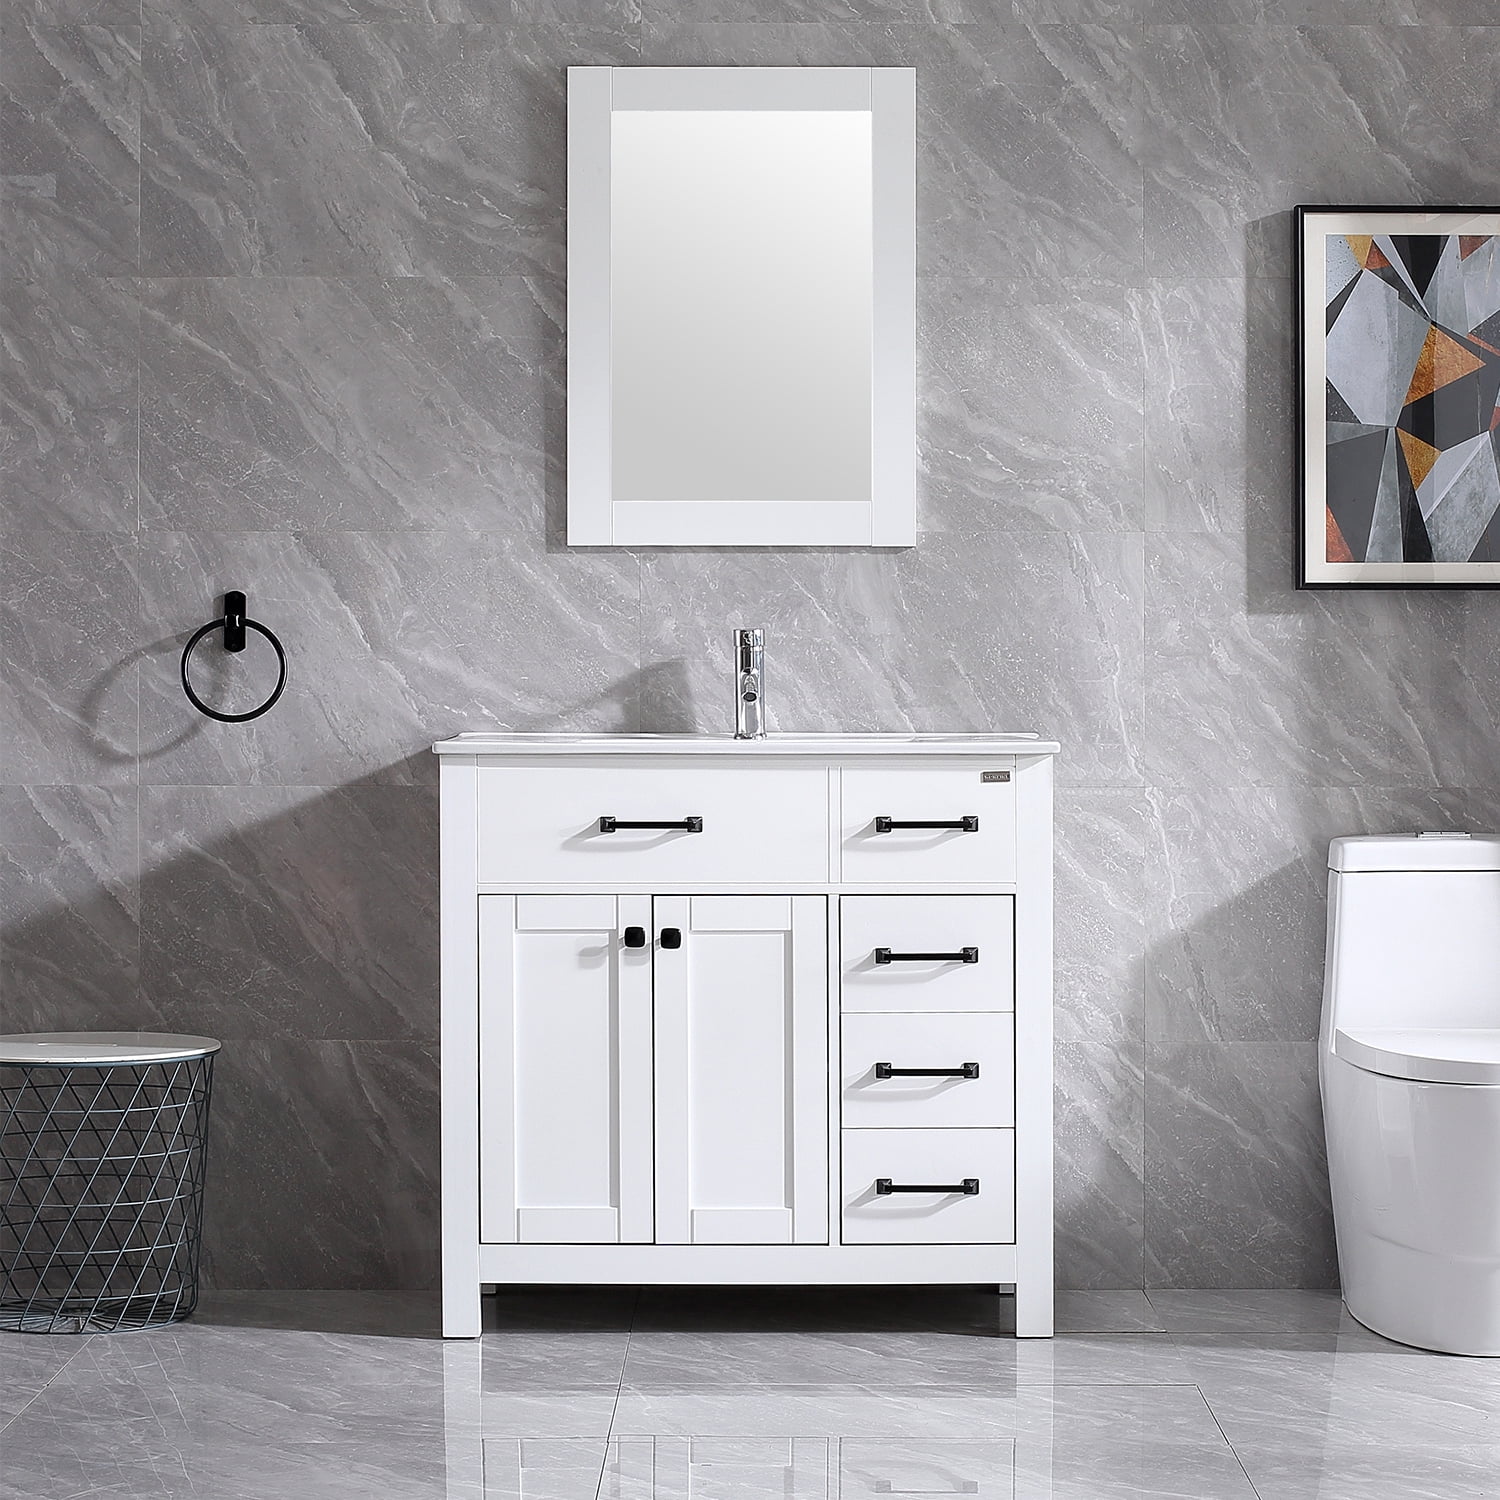 wonline 36" white bathroom vanity cabinet with sink in ceramic